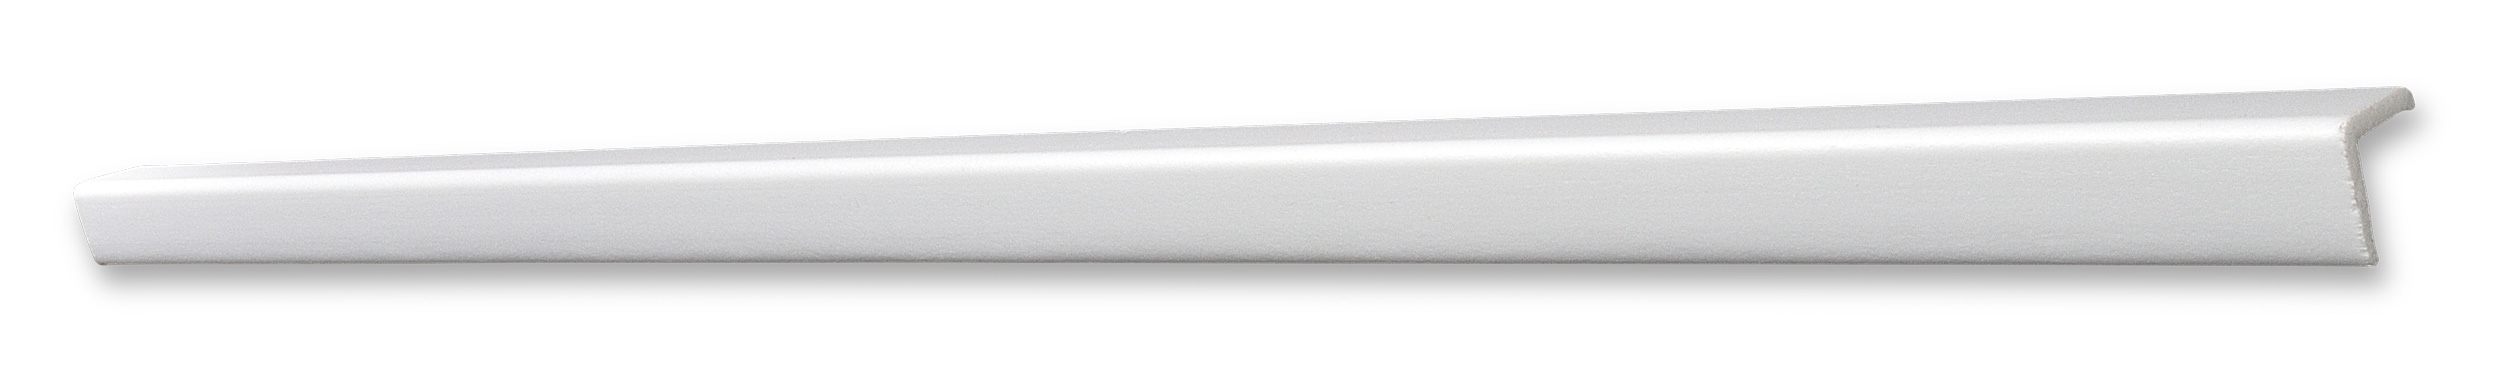 DECOSA Profil d'angle WP20 - polystyrène extra dur - blanc - 20 x 20 mm - longueur 2 m